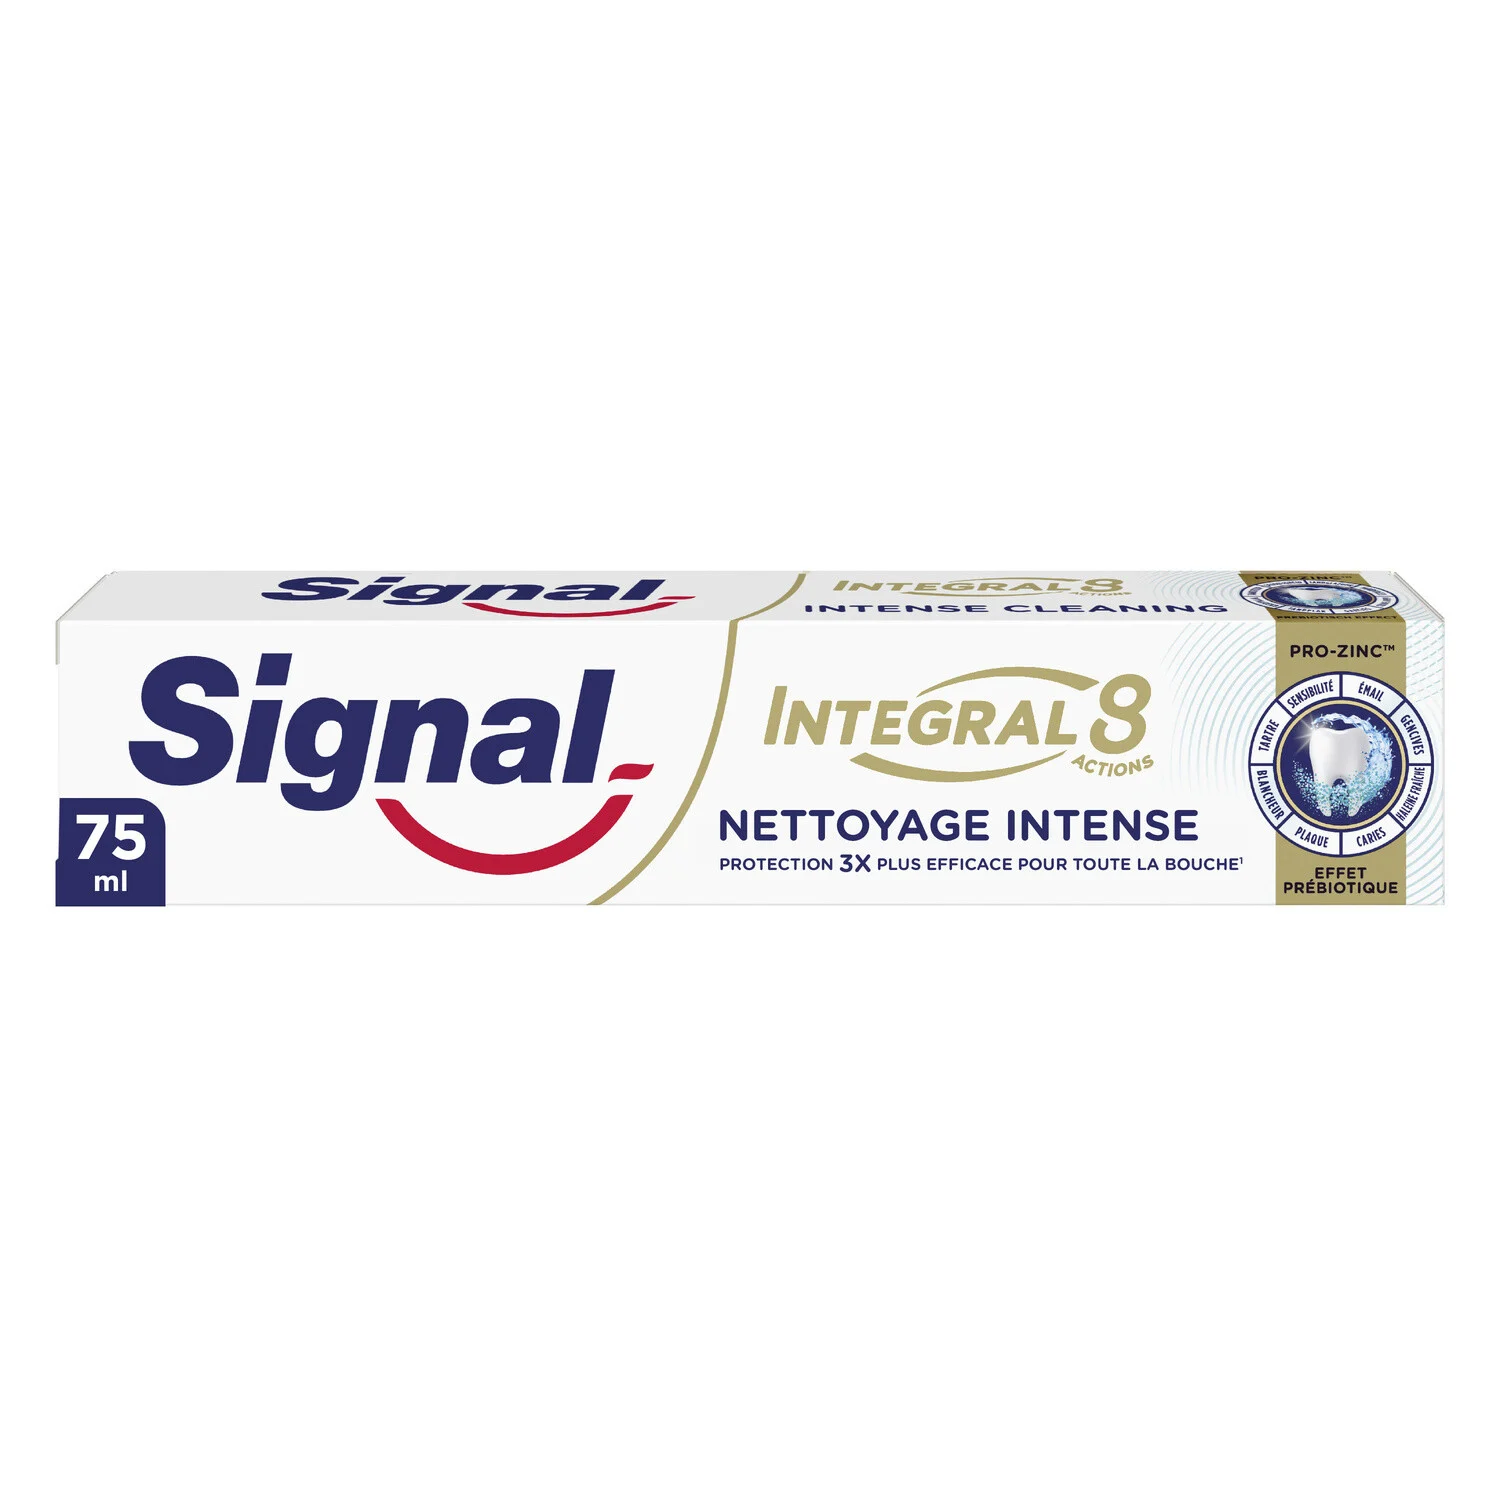 Dentifrice Integral 8 Nettoyage Intense Effet Prébiotique 75ml - Signal